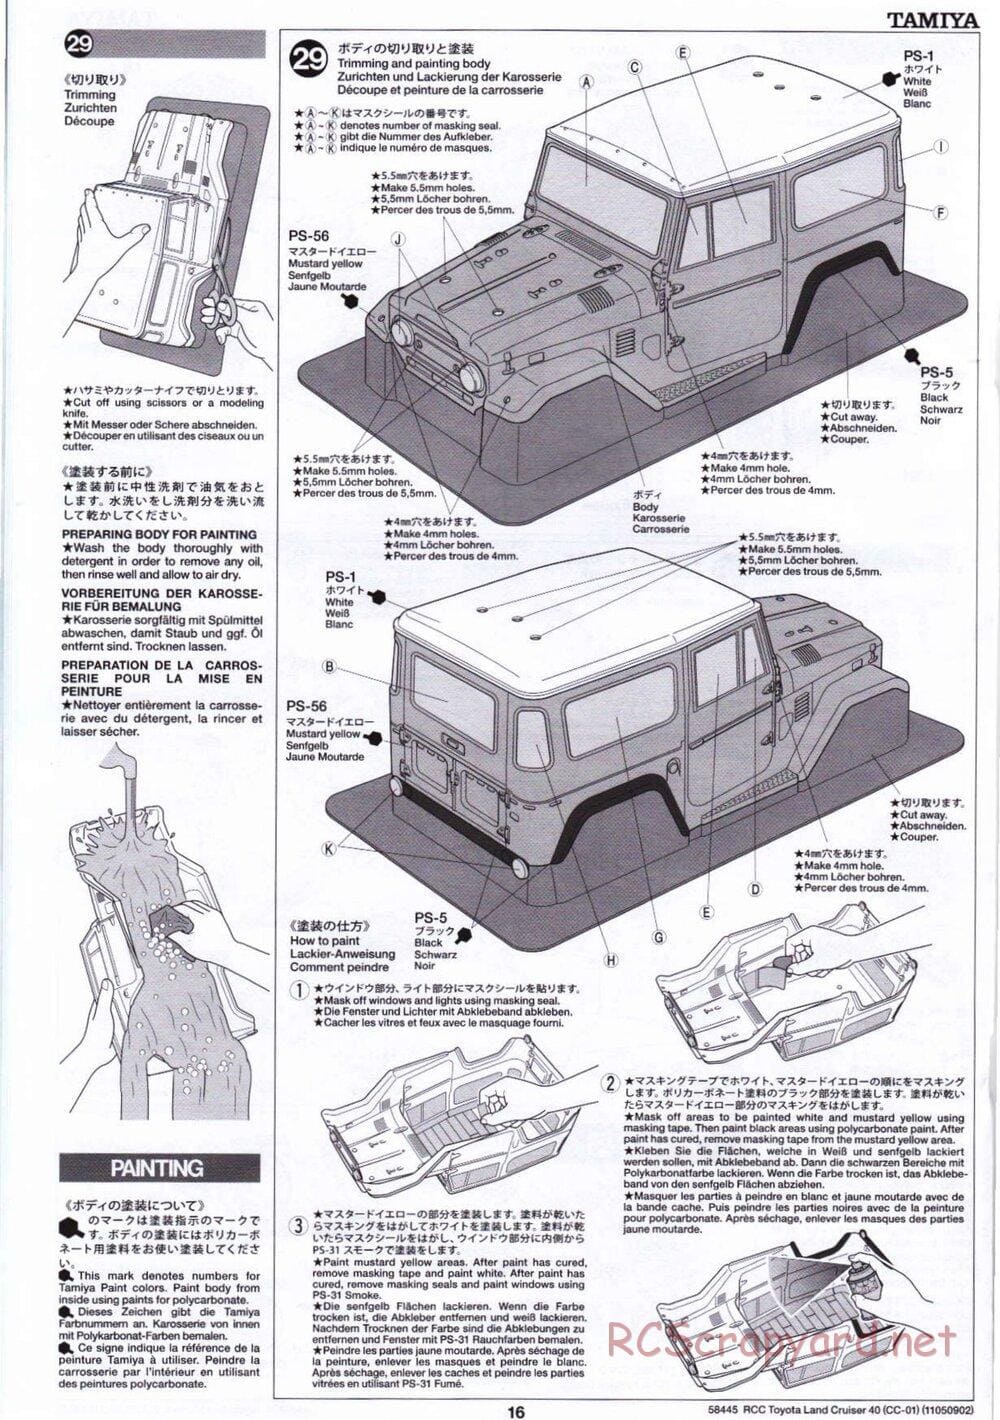 Tamiya - Toyota Land Cruiser 40 - CC-01 Chassis - Manual - Page 16